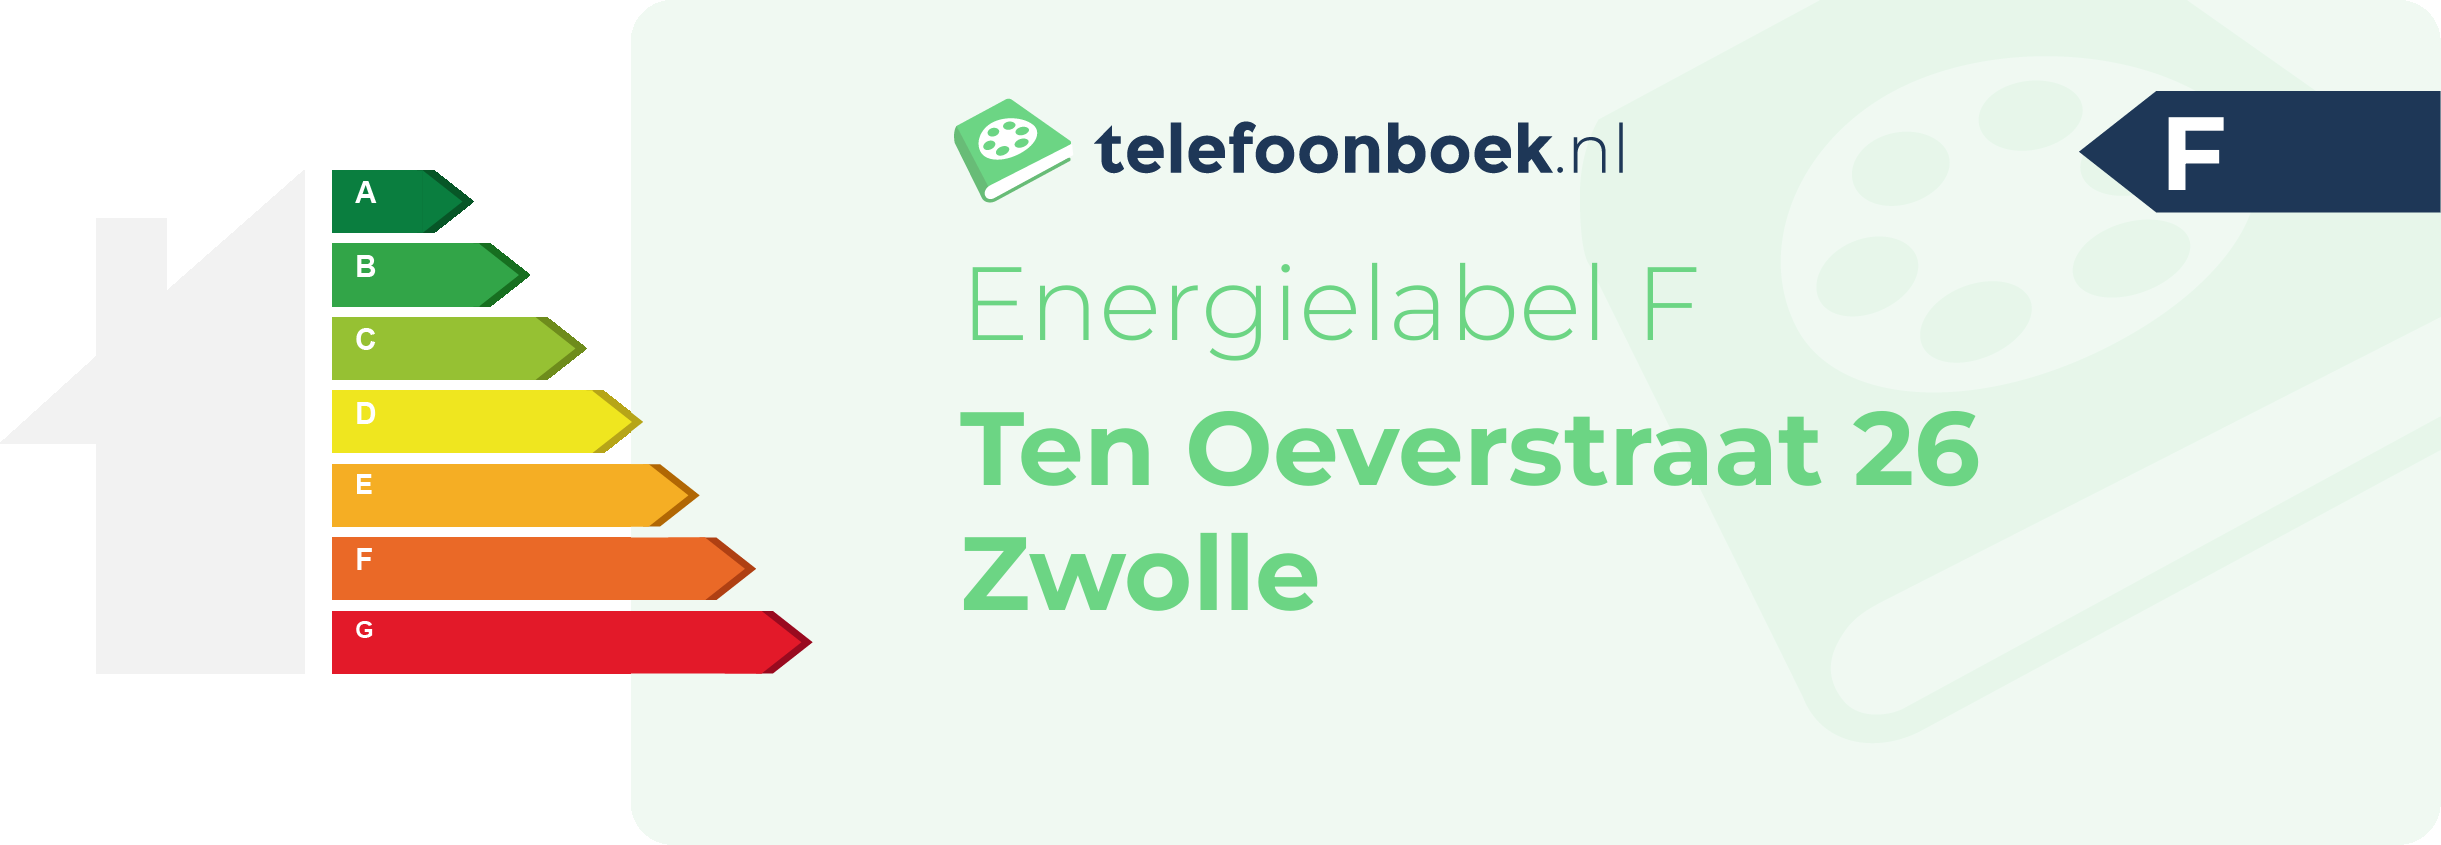 Energielabel Ten Oeverstraat 26 Zwolle